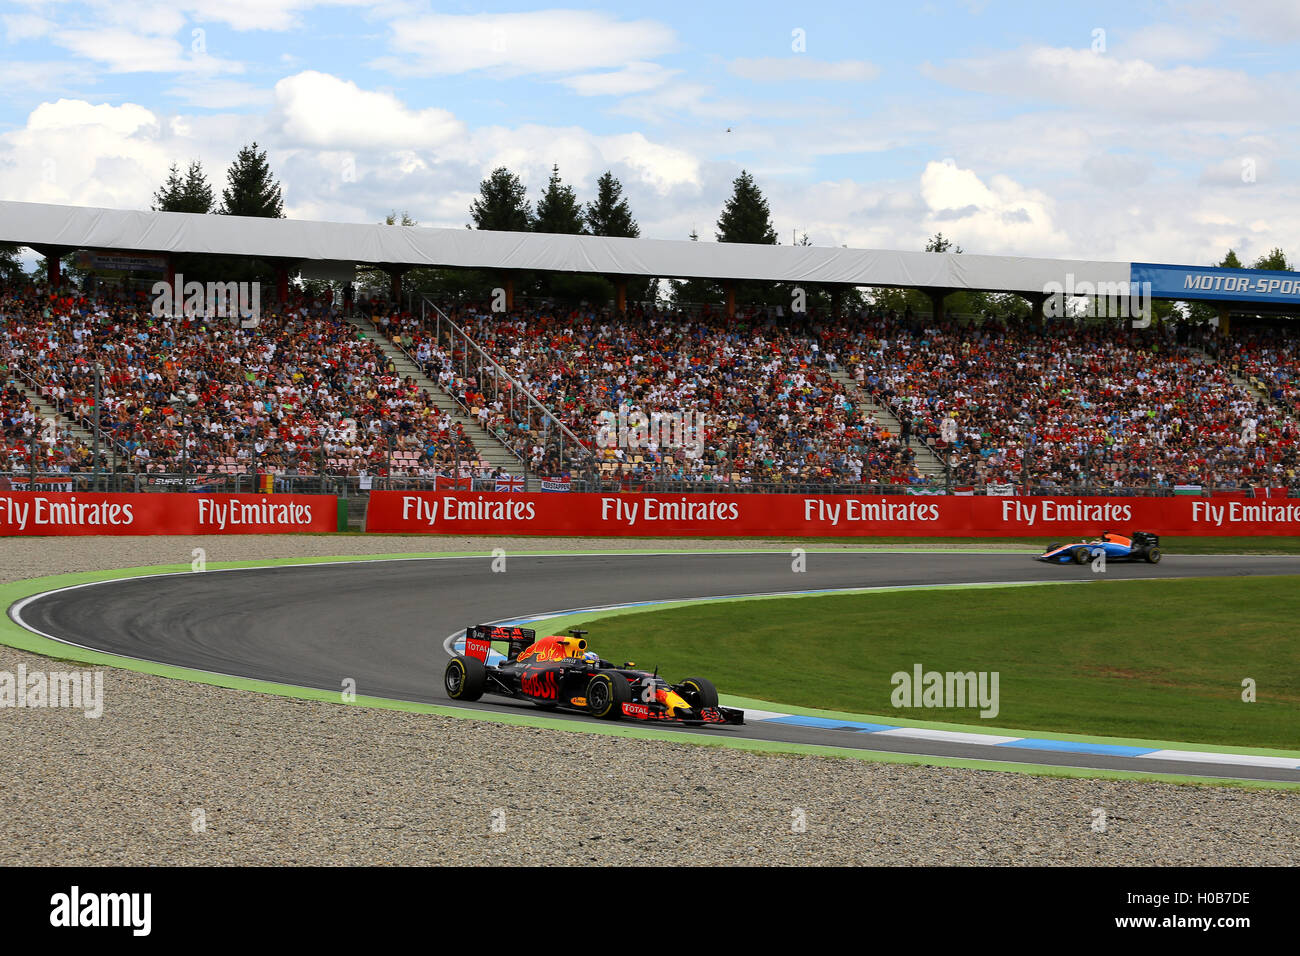 Daniel Ricciardo, Red Bull Racing, German Gp 2016, Hockenheim Stock Photo